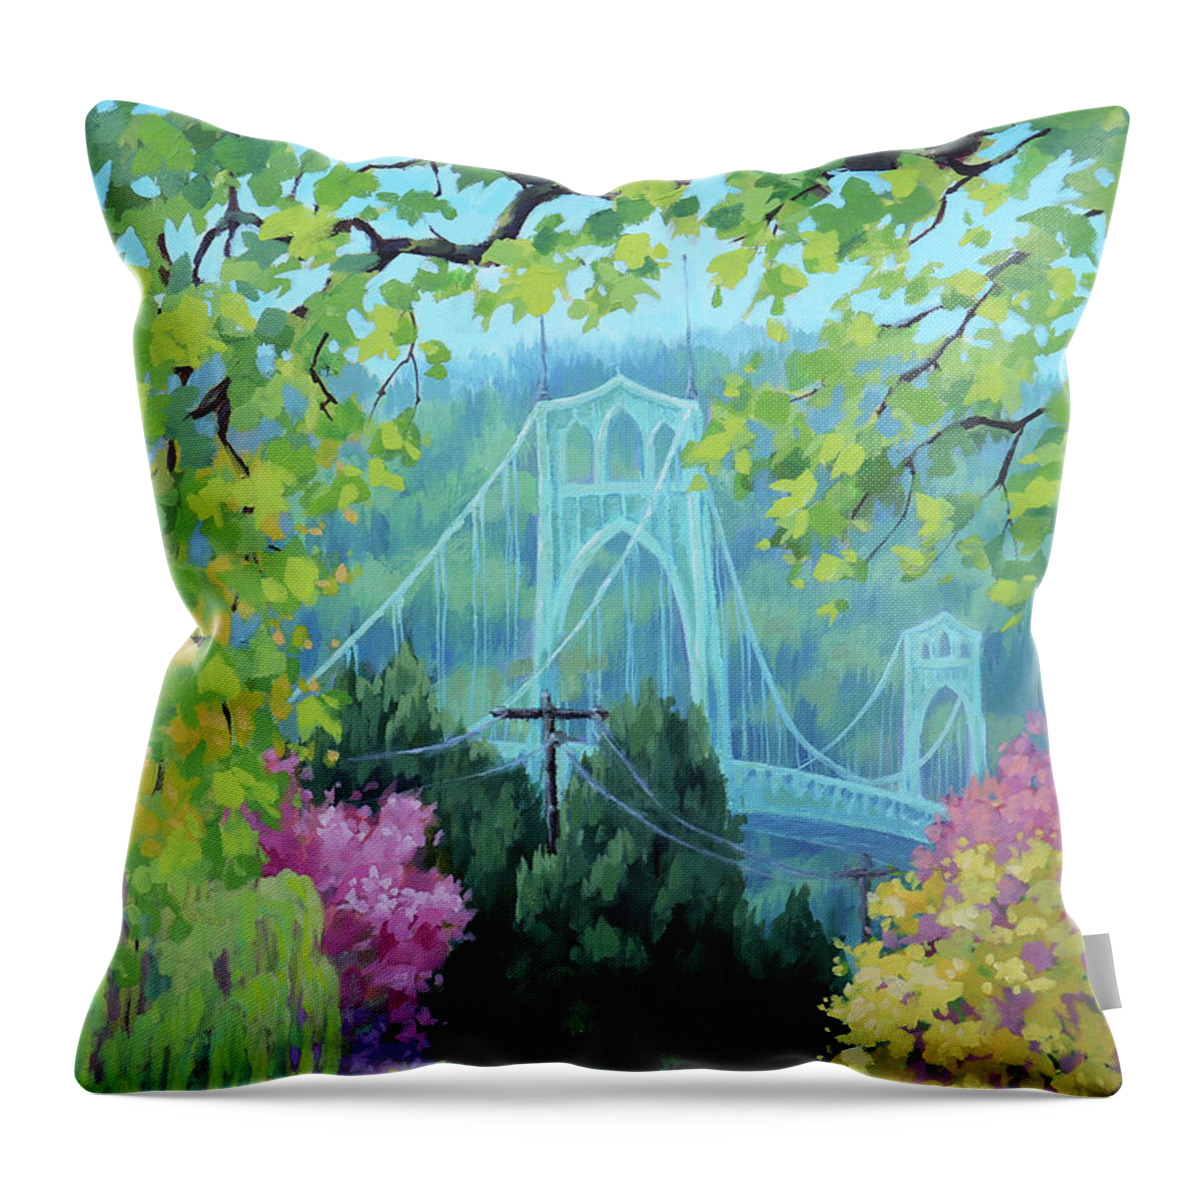 Portland Throw Pillow featuring the painting Spring Bridge by Karen Ilari